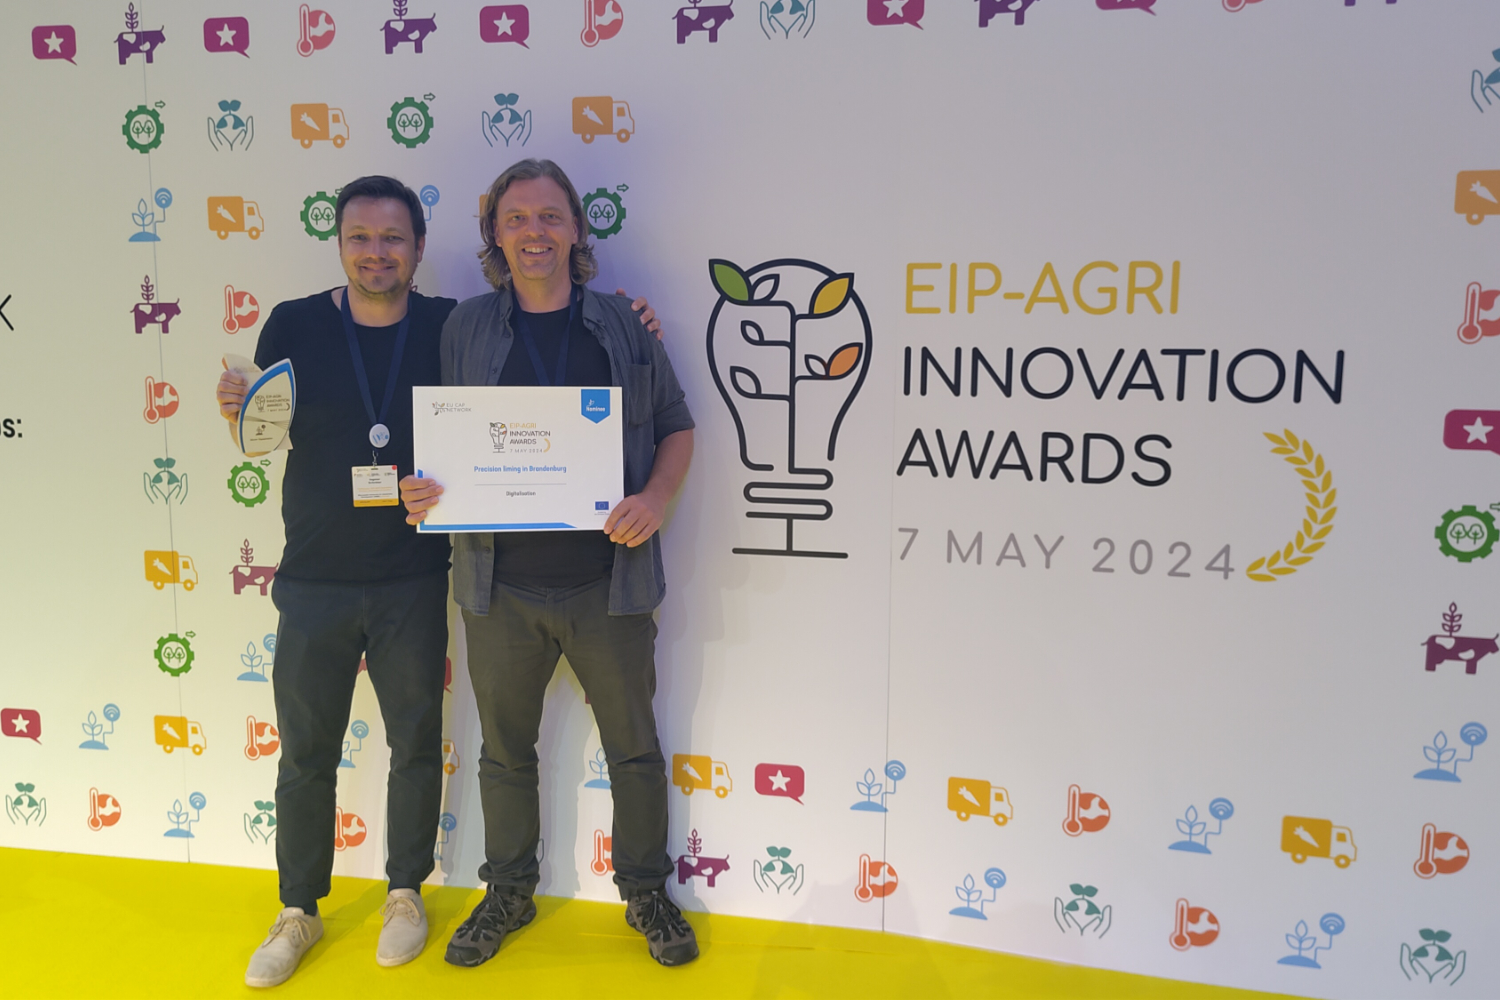 Ingmar Schröter (left) and Eric Bönecke accepted the award on behalf of the company.